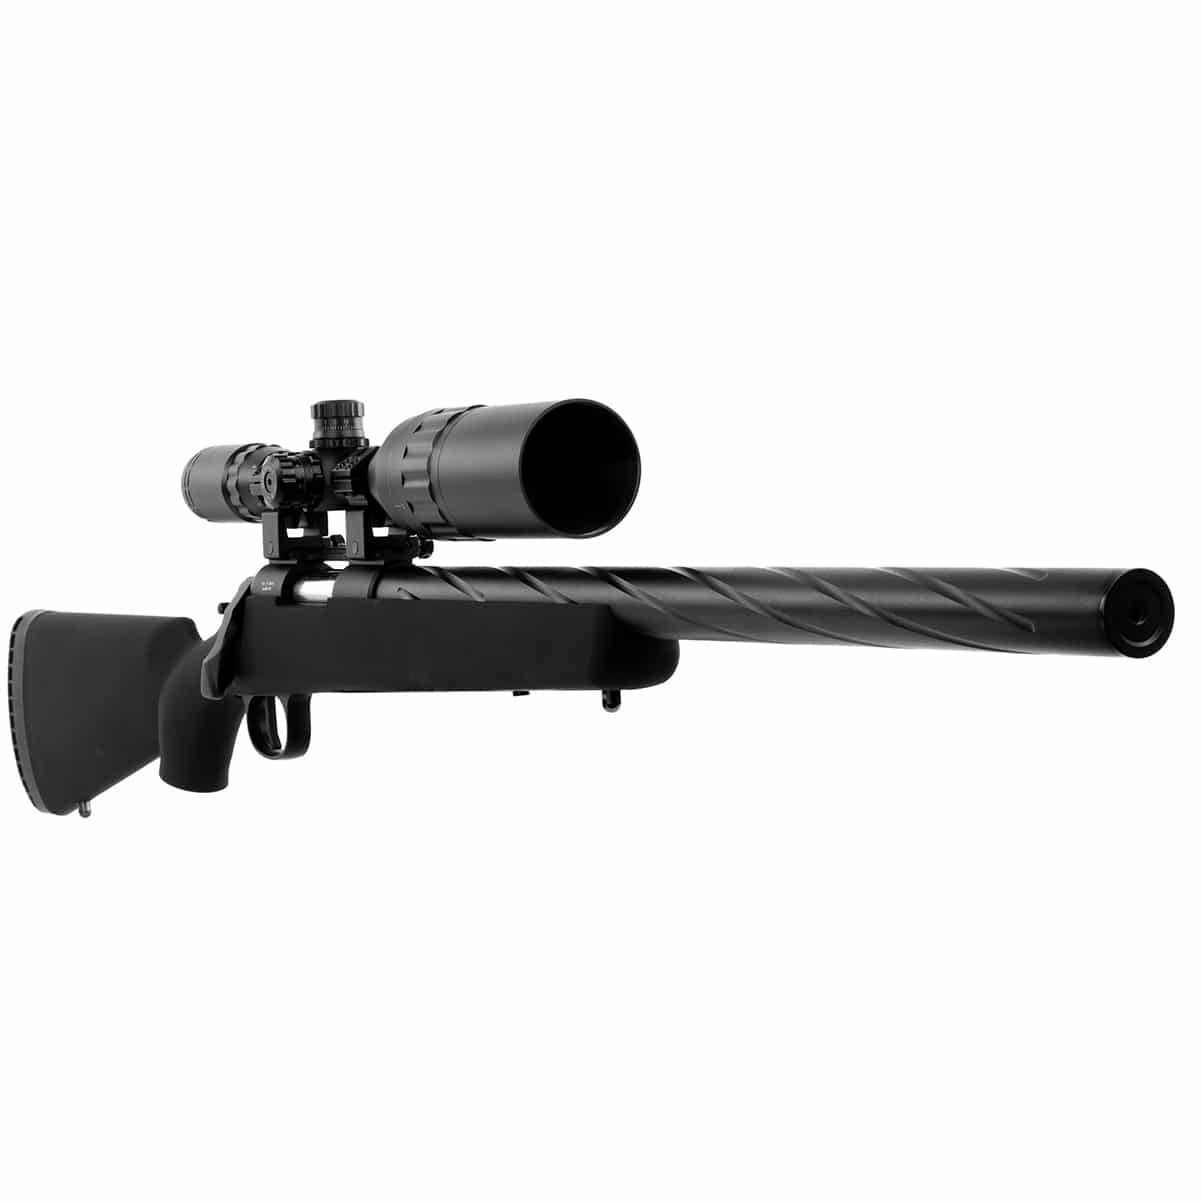 Novritsch SSG24 Airsoft Sniper Rifle - Black (Spring Power)